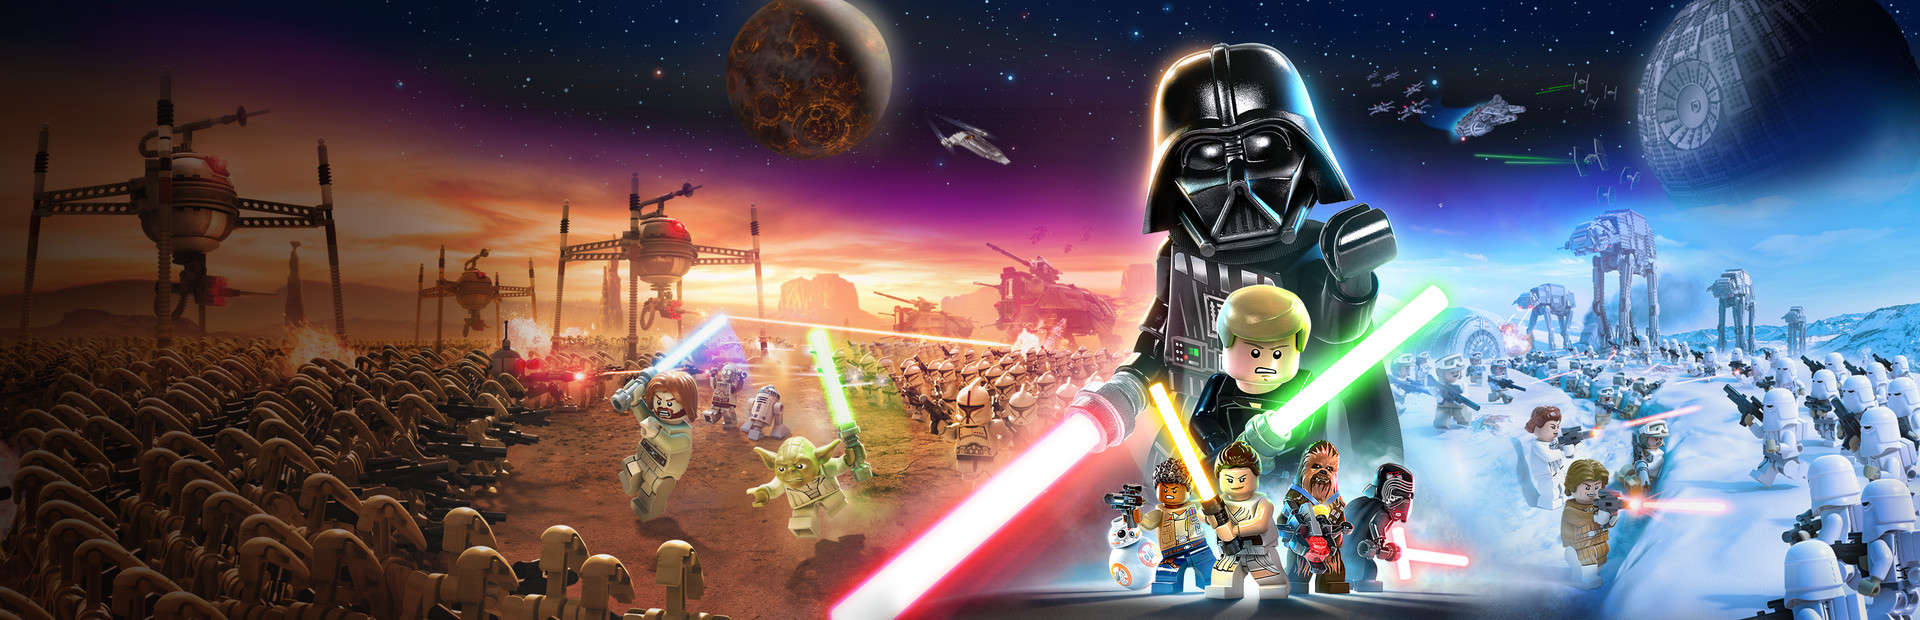 LEGO STAR WARS SKYWALKER SAGA CHEAT CODES